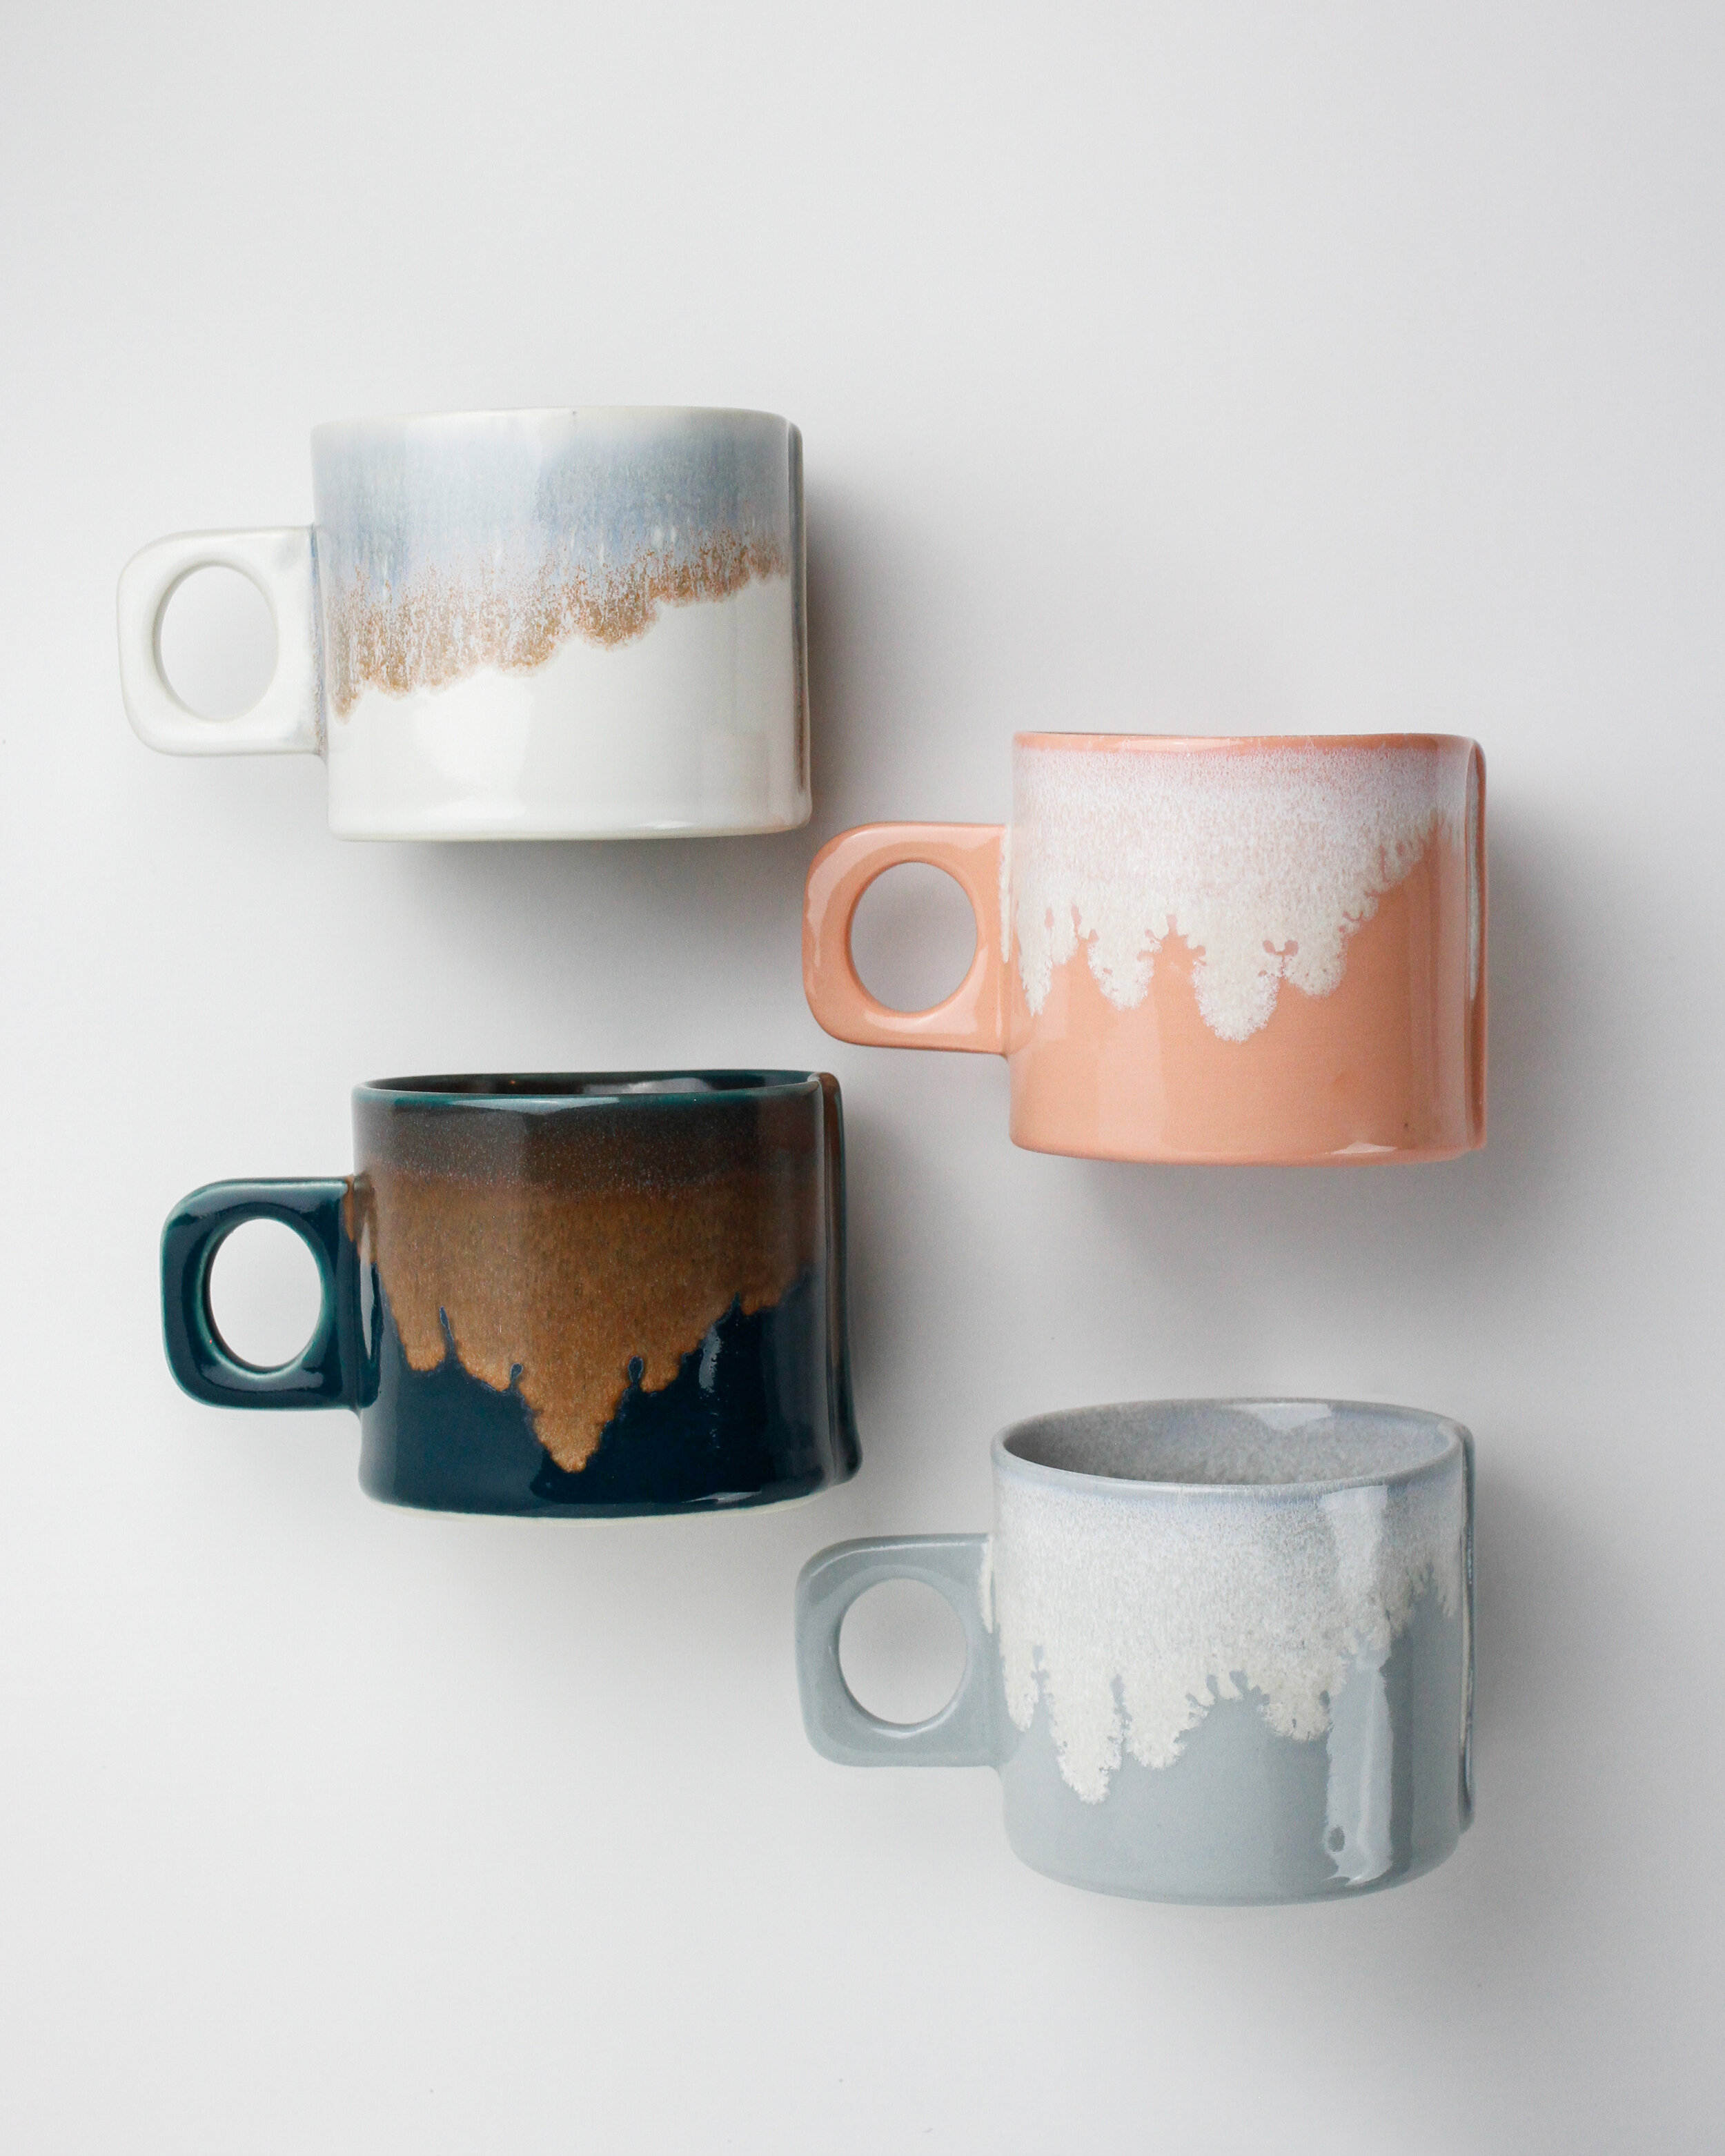 Mugs, Set of 4